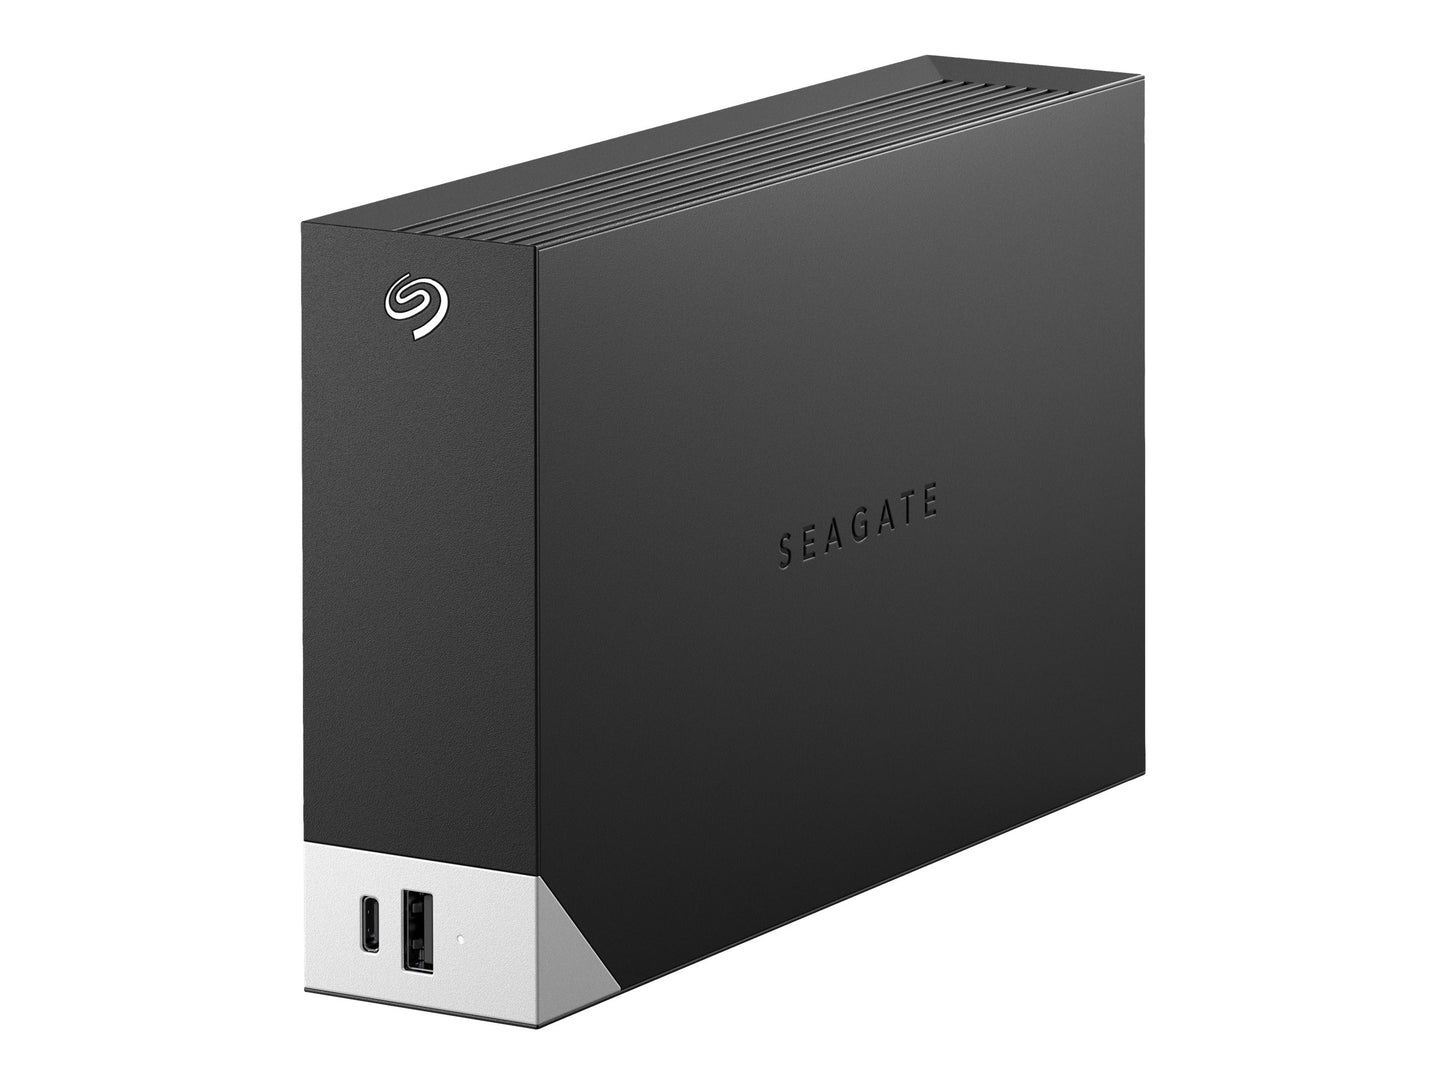 Seagate Hub One Touch 4TB Type C STLC4000400 External Hard Drive